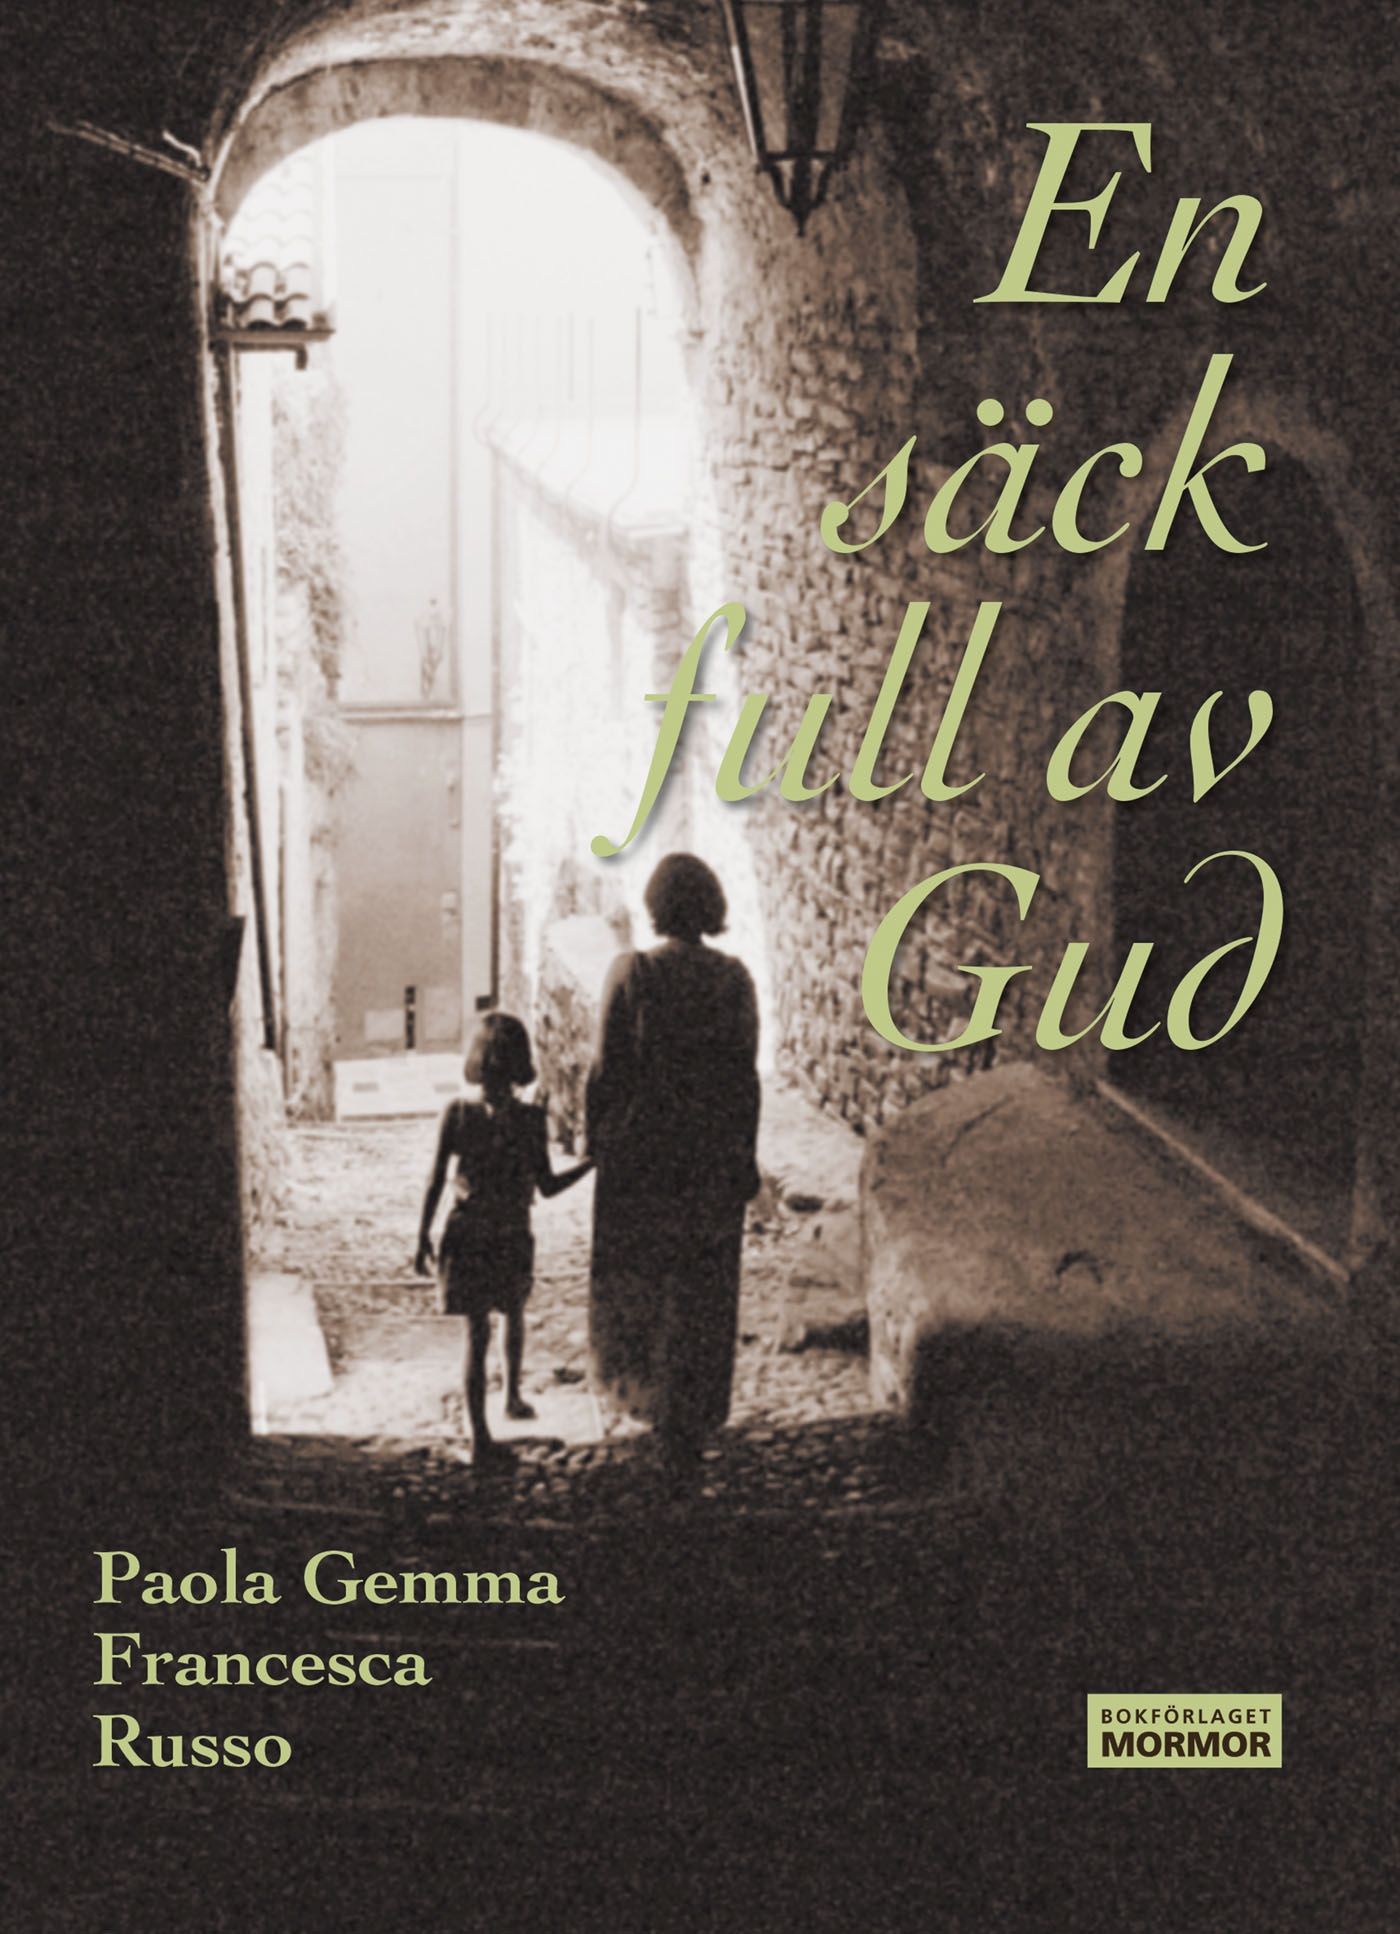 En säck full av Gud, e-bog af Paola Russo